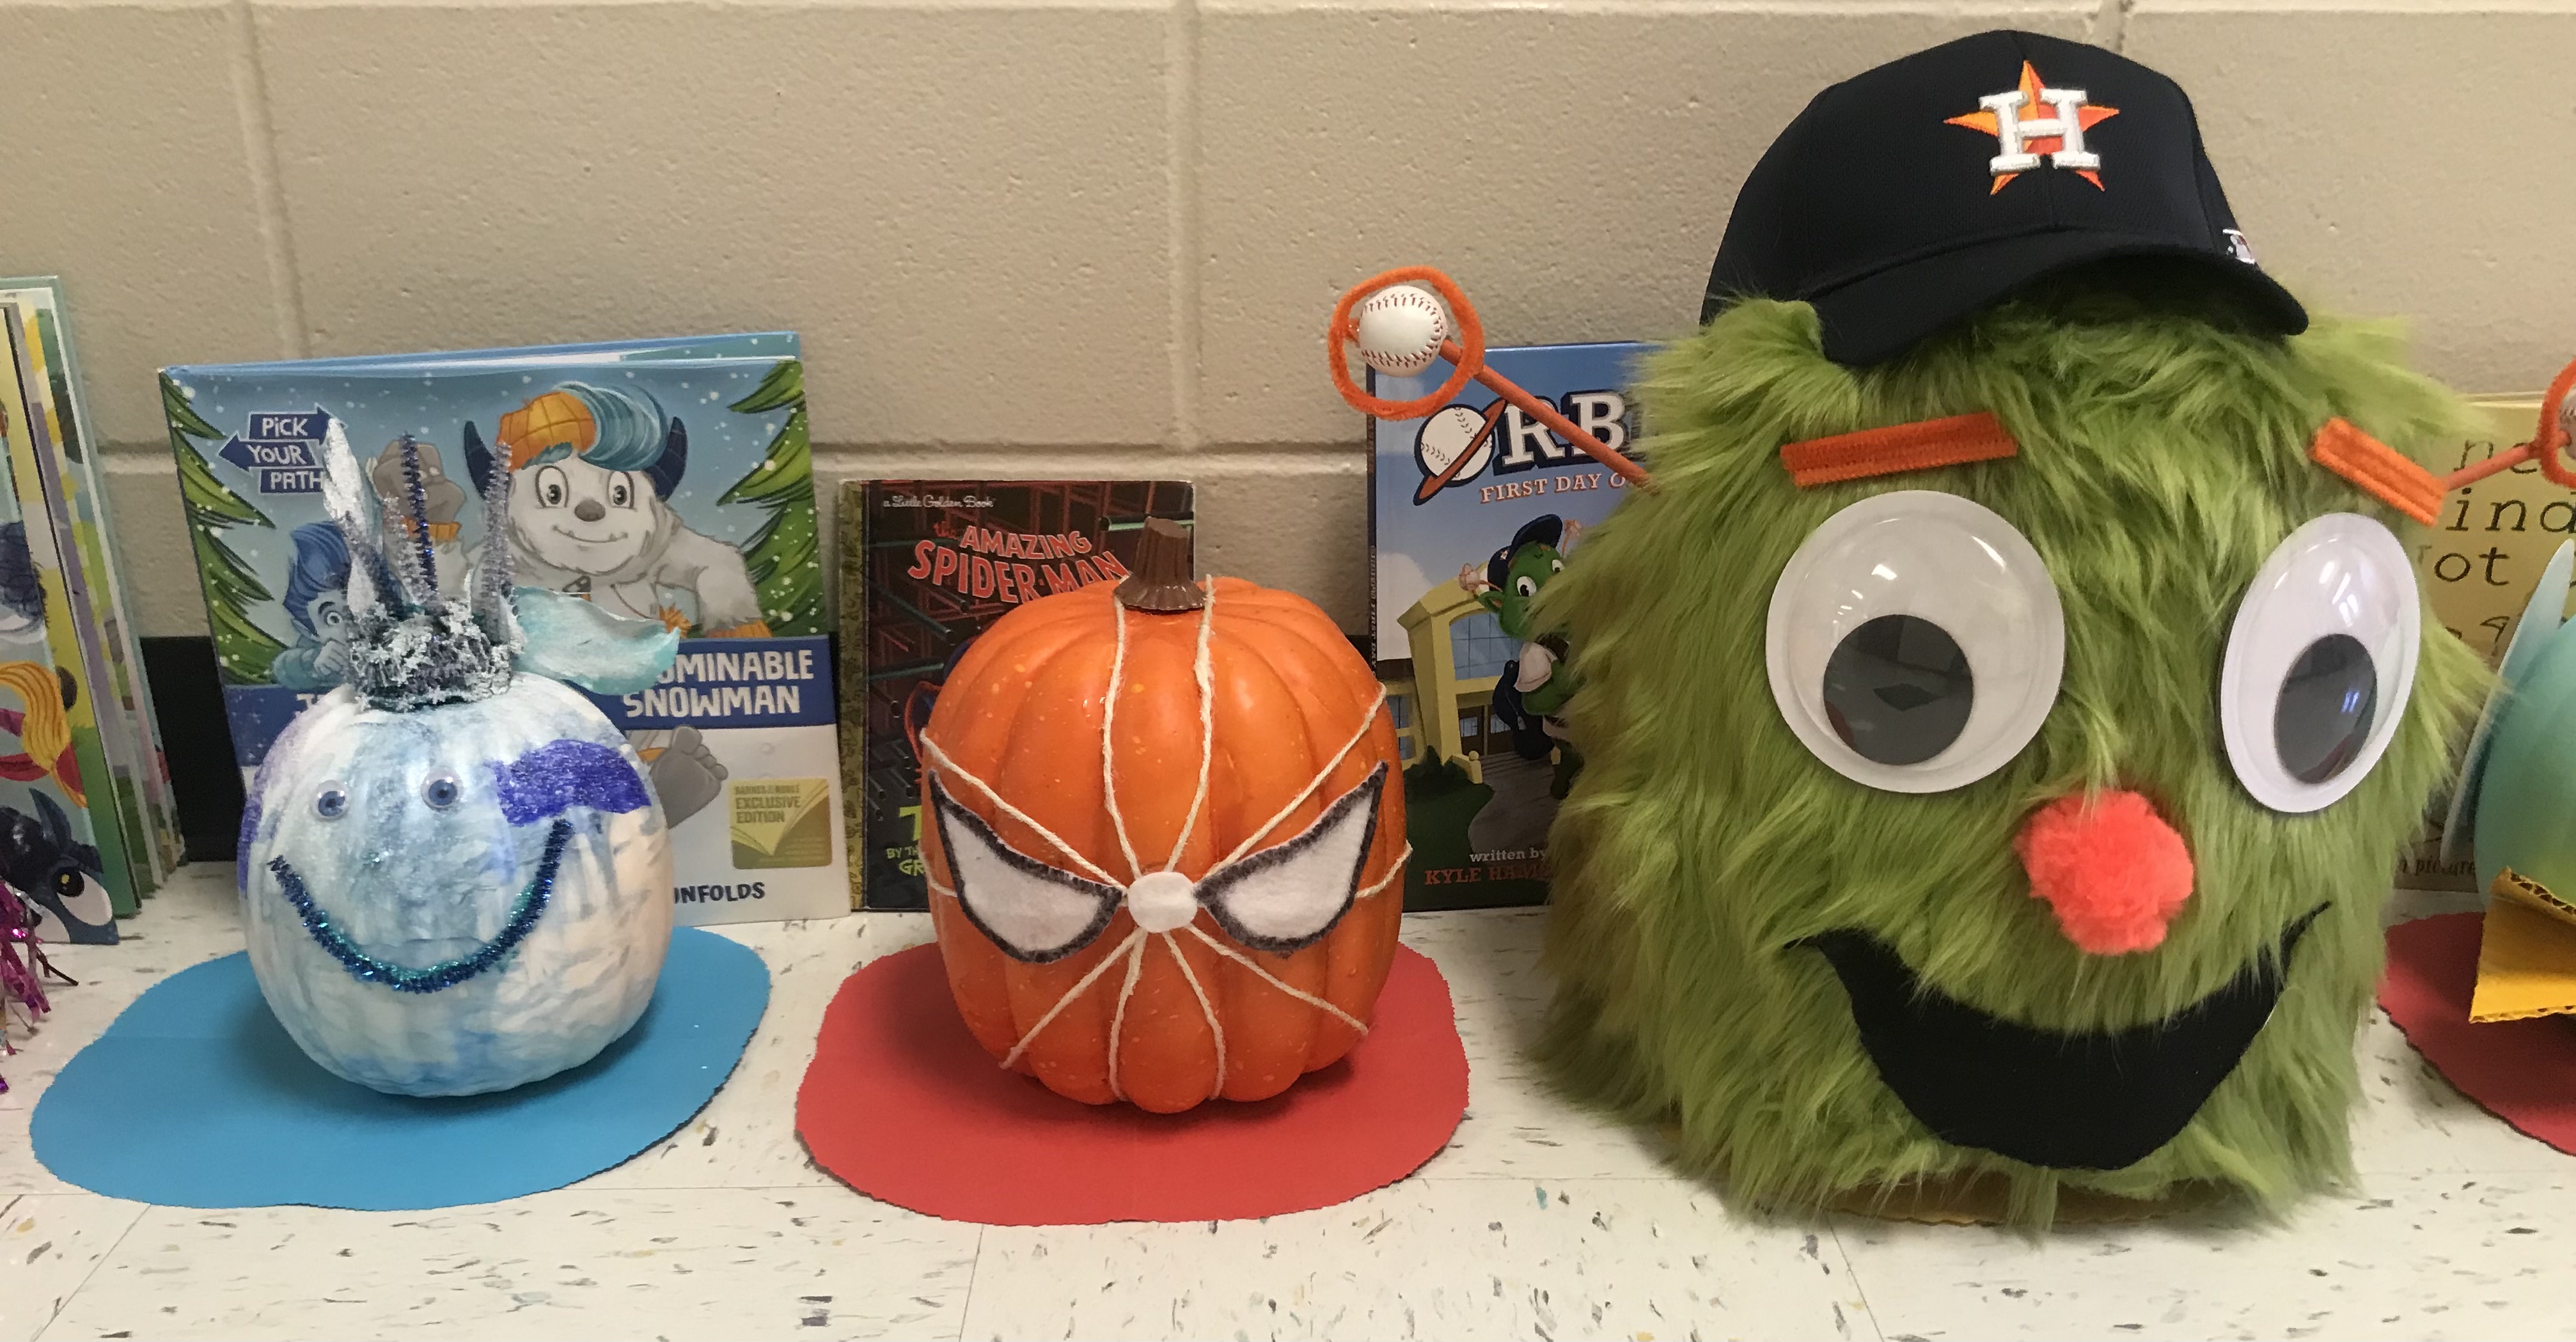 Pumpkins decorated like a snowman, Spiderman and Orbit